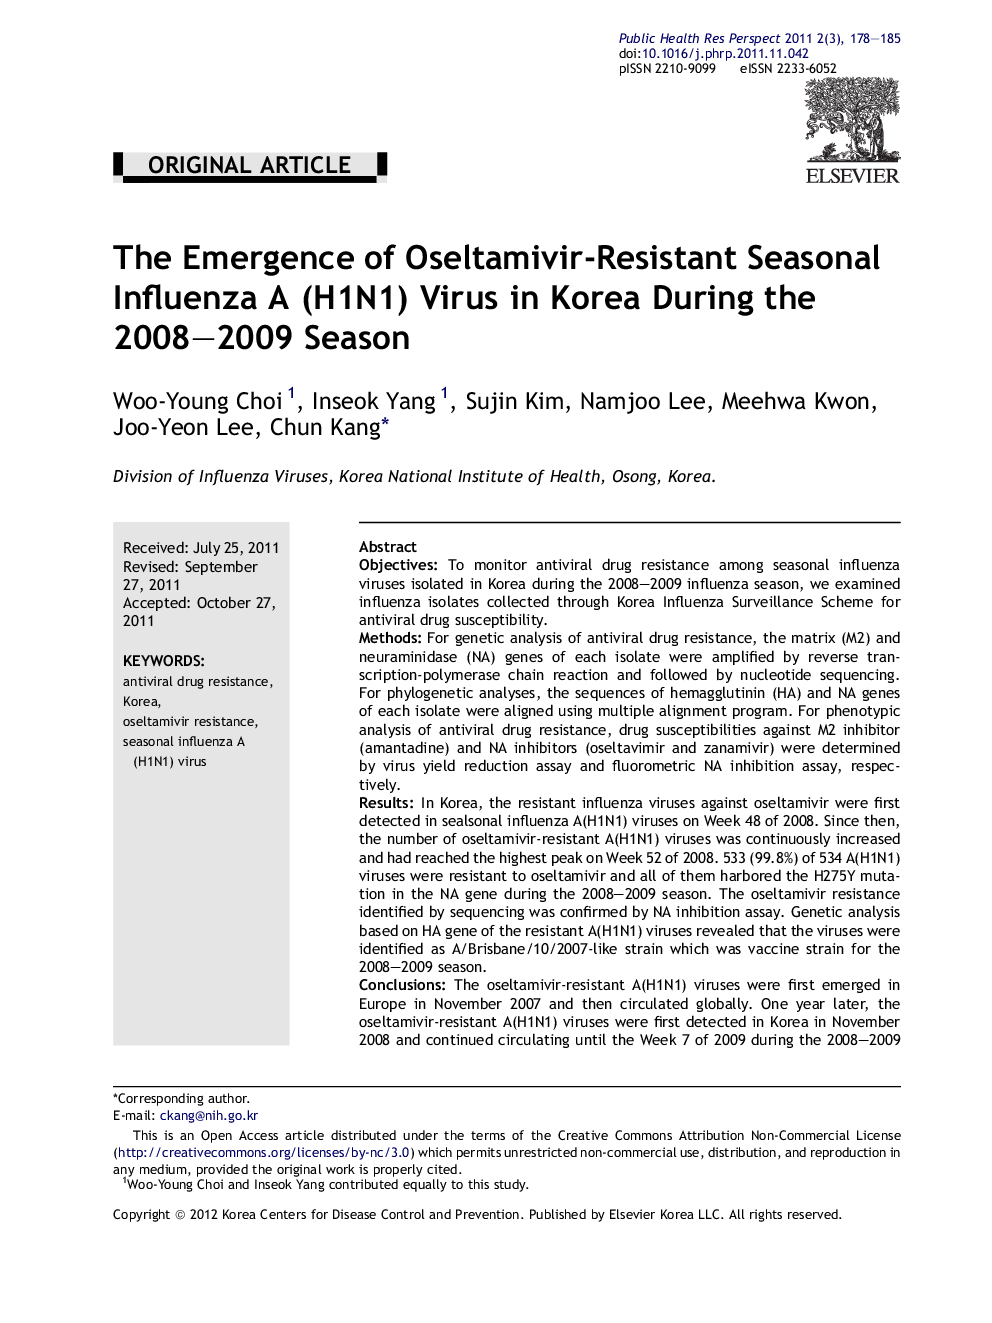 The Emergence of Oseltamivir-Resistant Seasonal Influenza A (H1N1) Virus in Korea During the 2008–2009 Season 